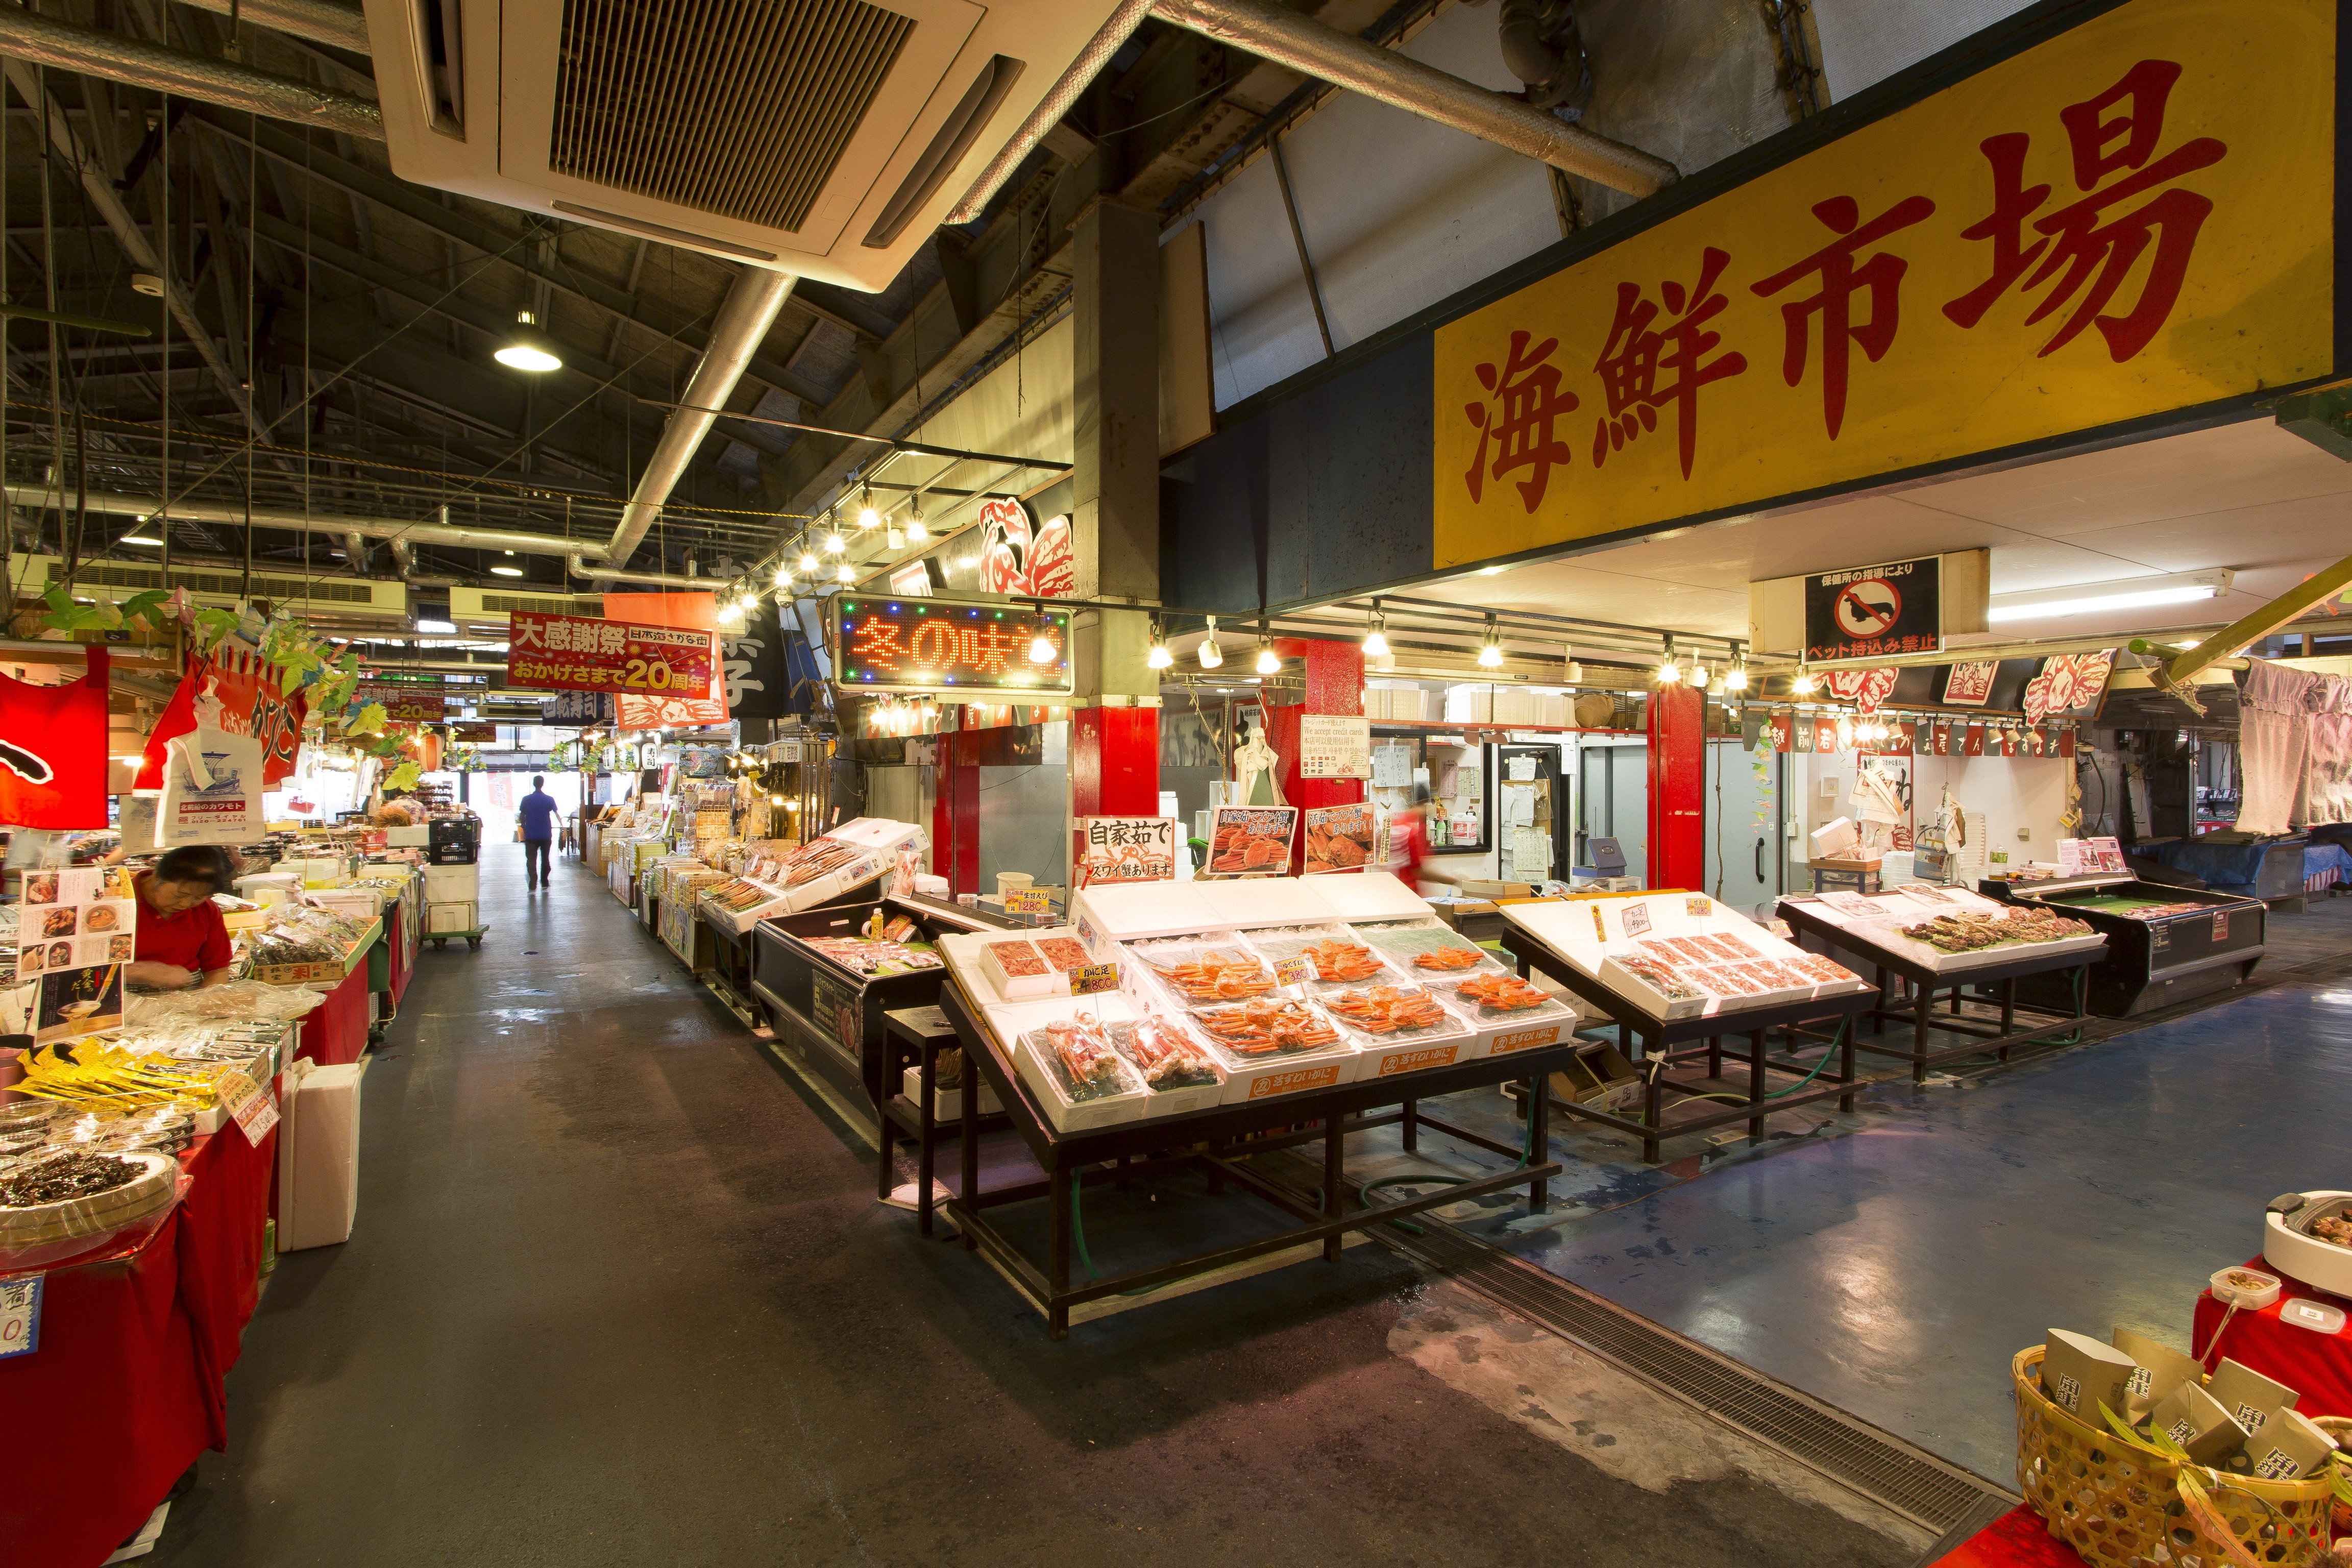 Tsuruga City, Fukui Prefecture Nihonkai Sakanamachi: Seafood market popular for crab seafood rice bowls and conveyor belt sushi